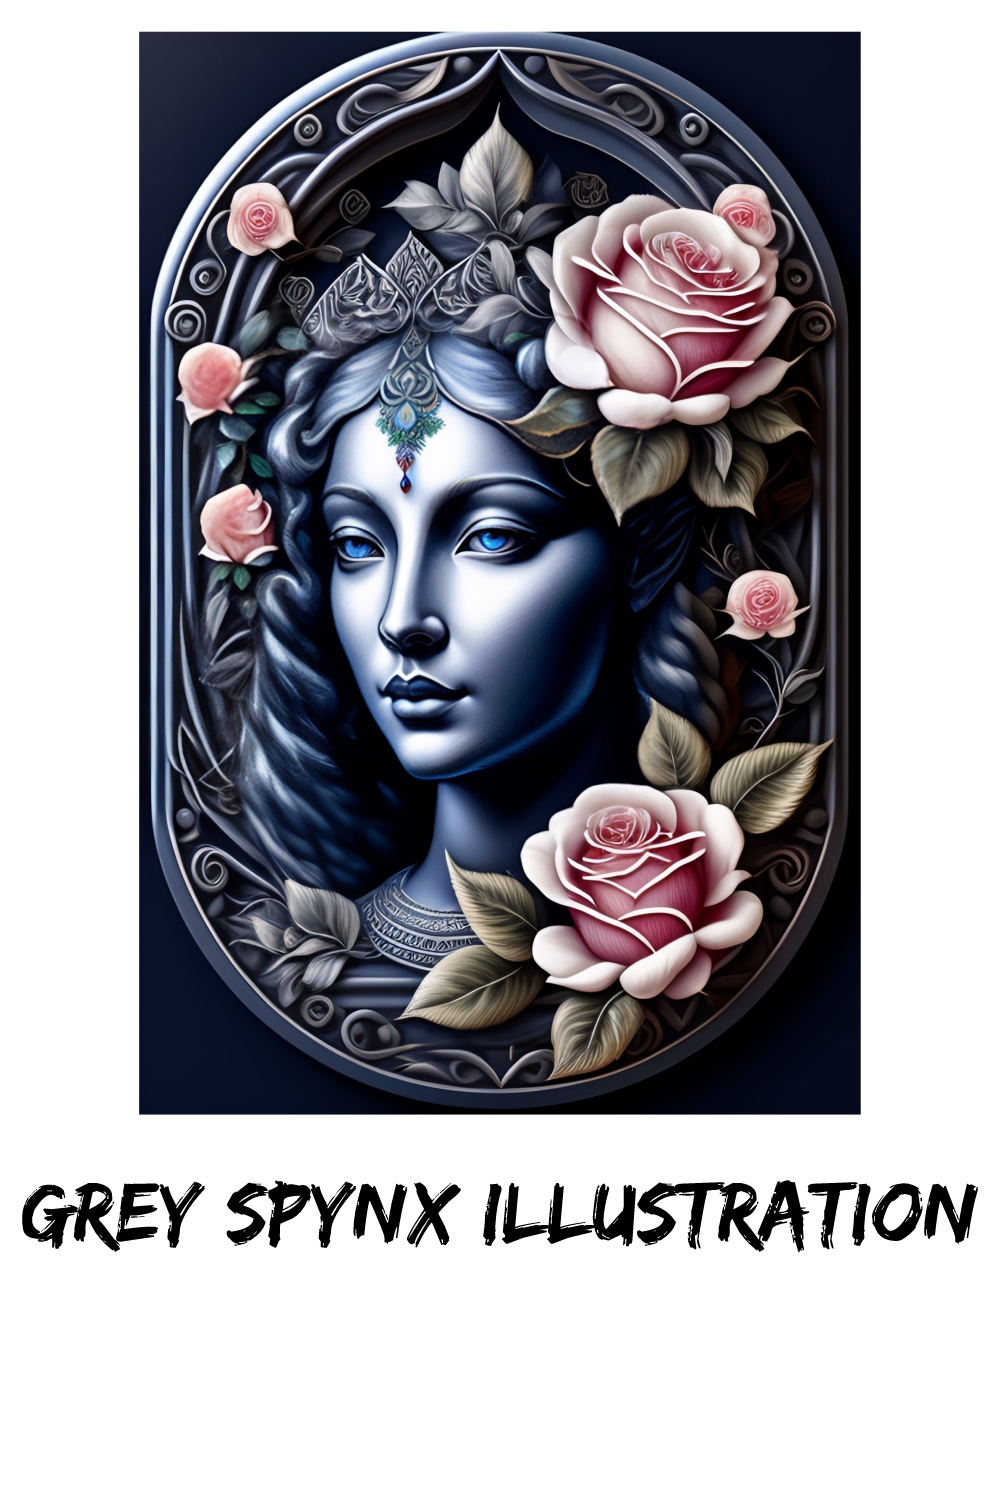 Grey Sphynx Illustration pinterest preview image.